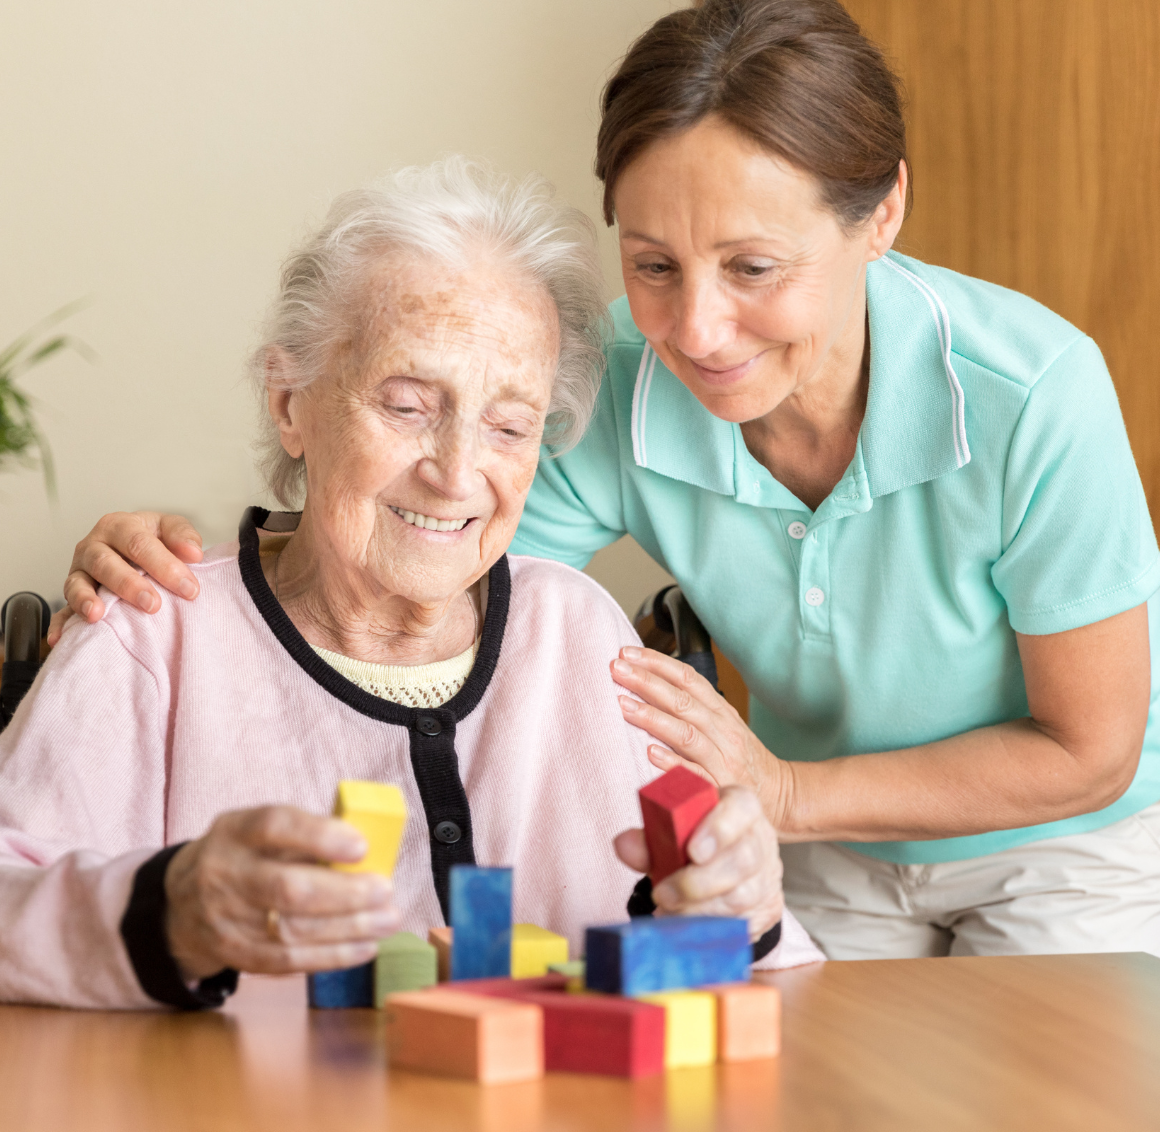 alzheimer's and dementia care for seniors